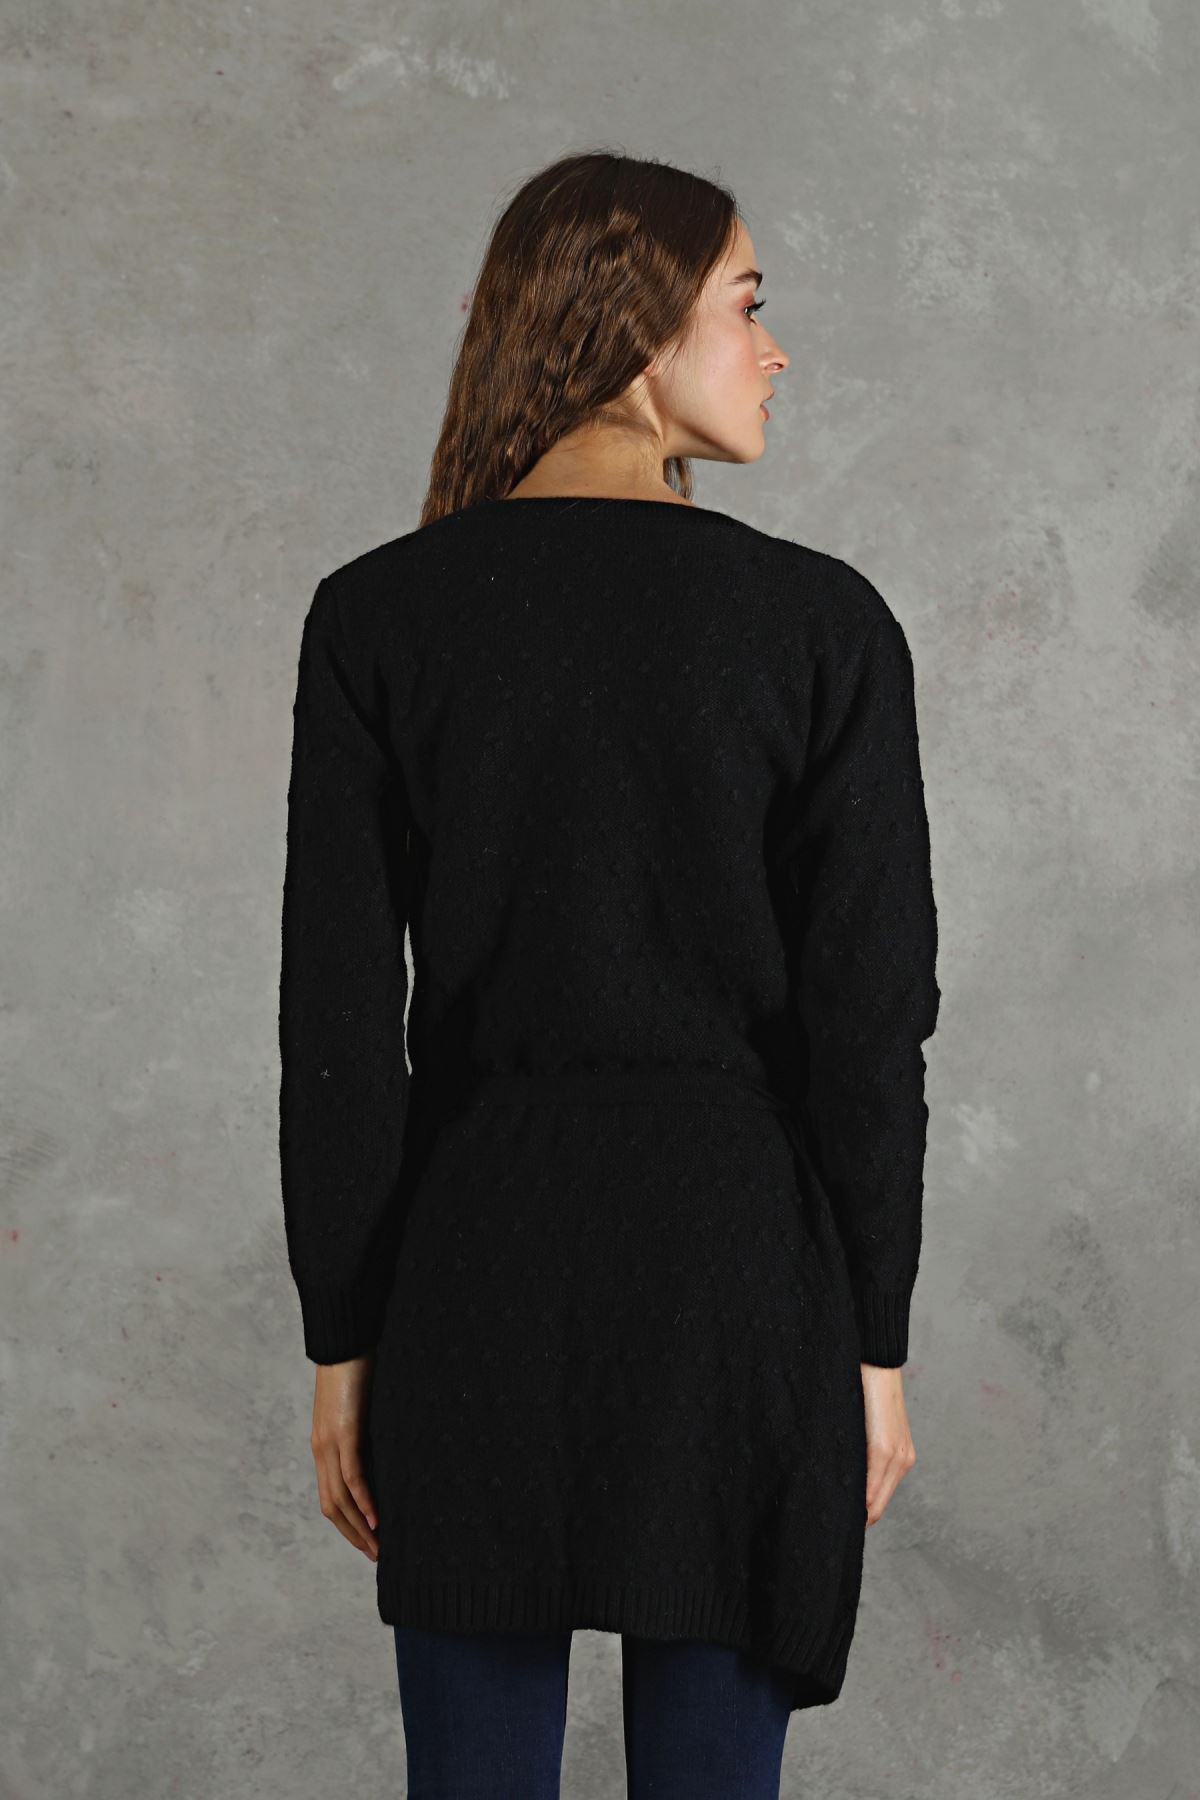 Belted Women's Sweater Cardigan